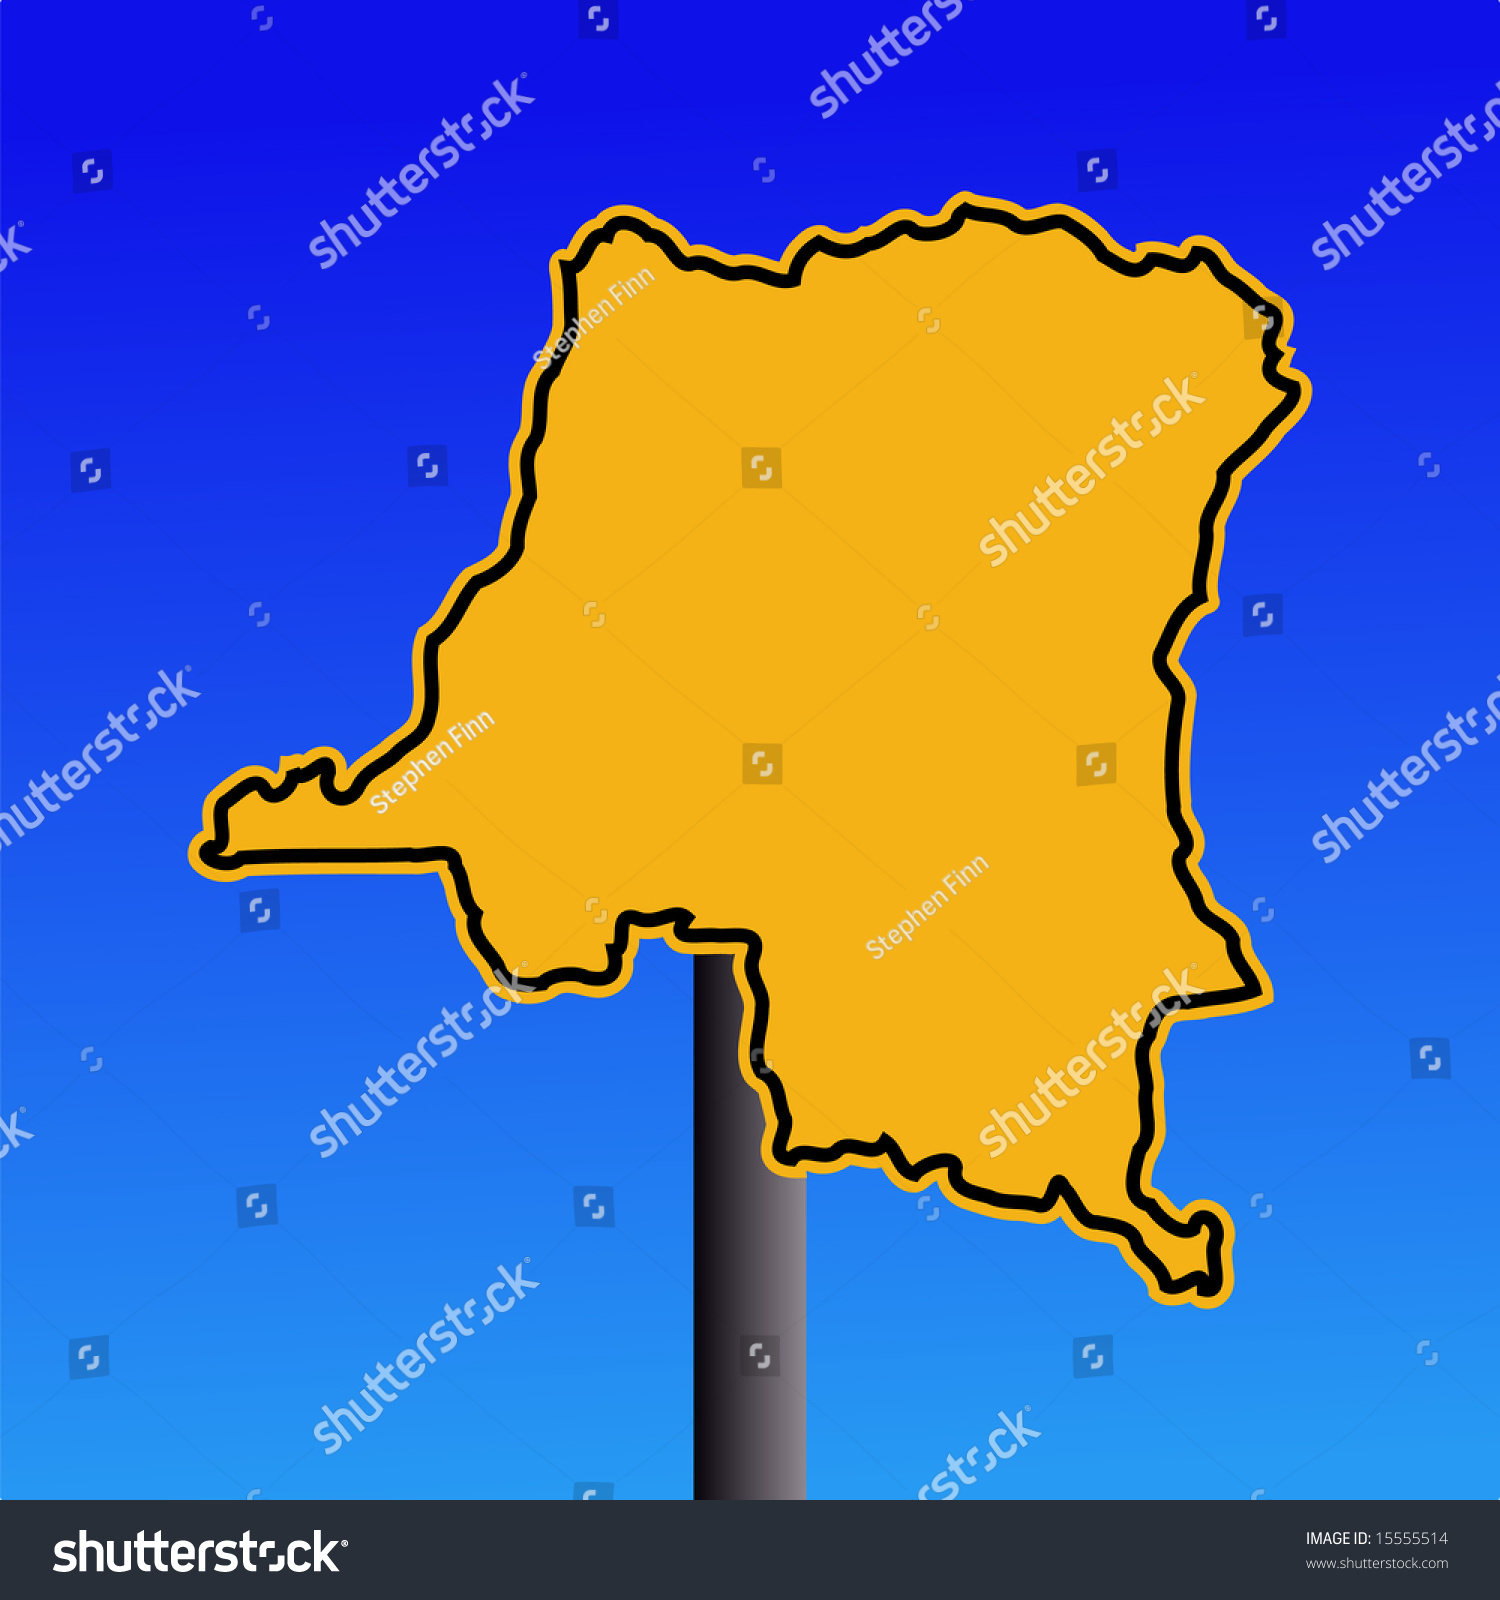 yellow Democratic Republic of Congo map warning sign on blue illustration JPG #15555514